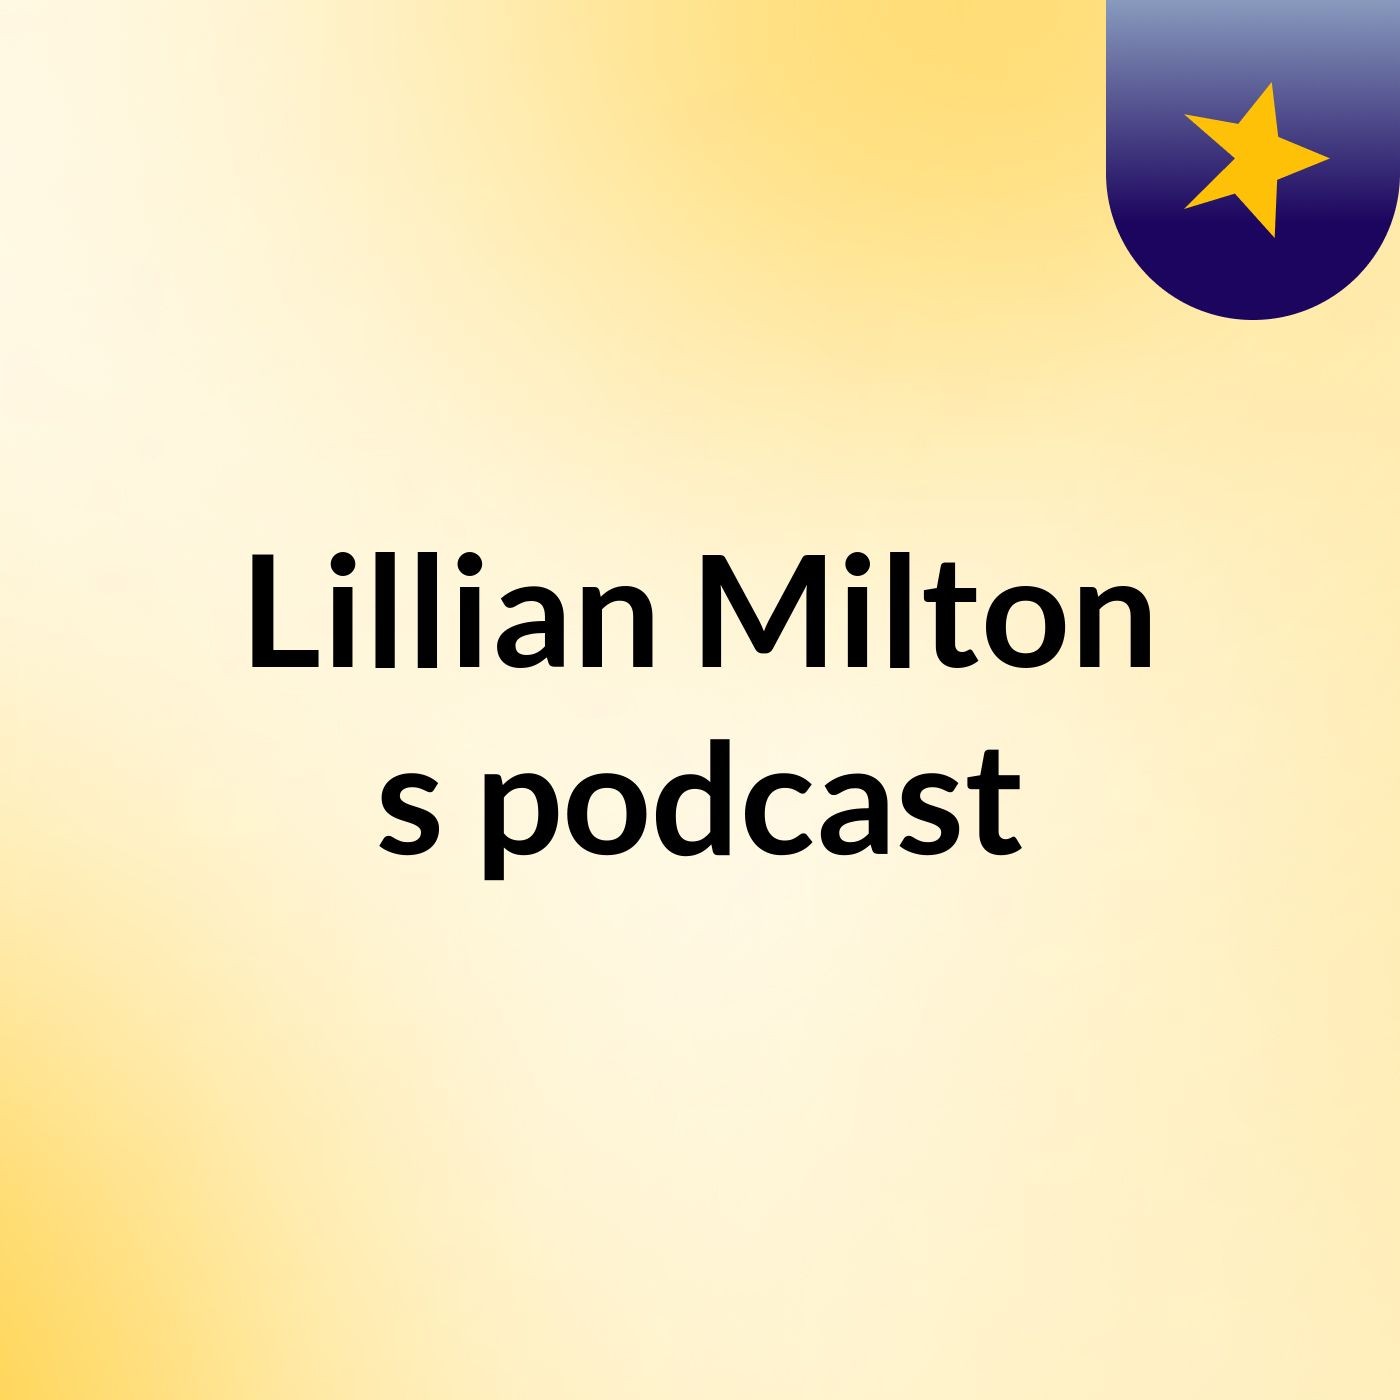 Episode 2 - Lillian Milton's podcast